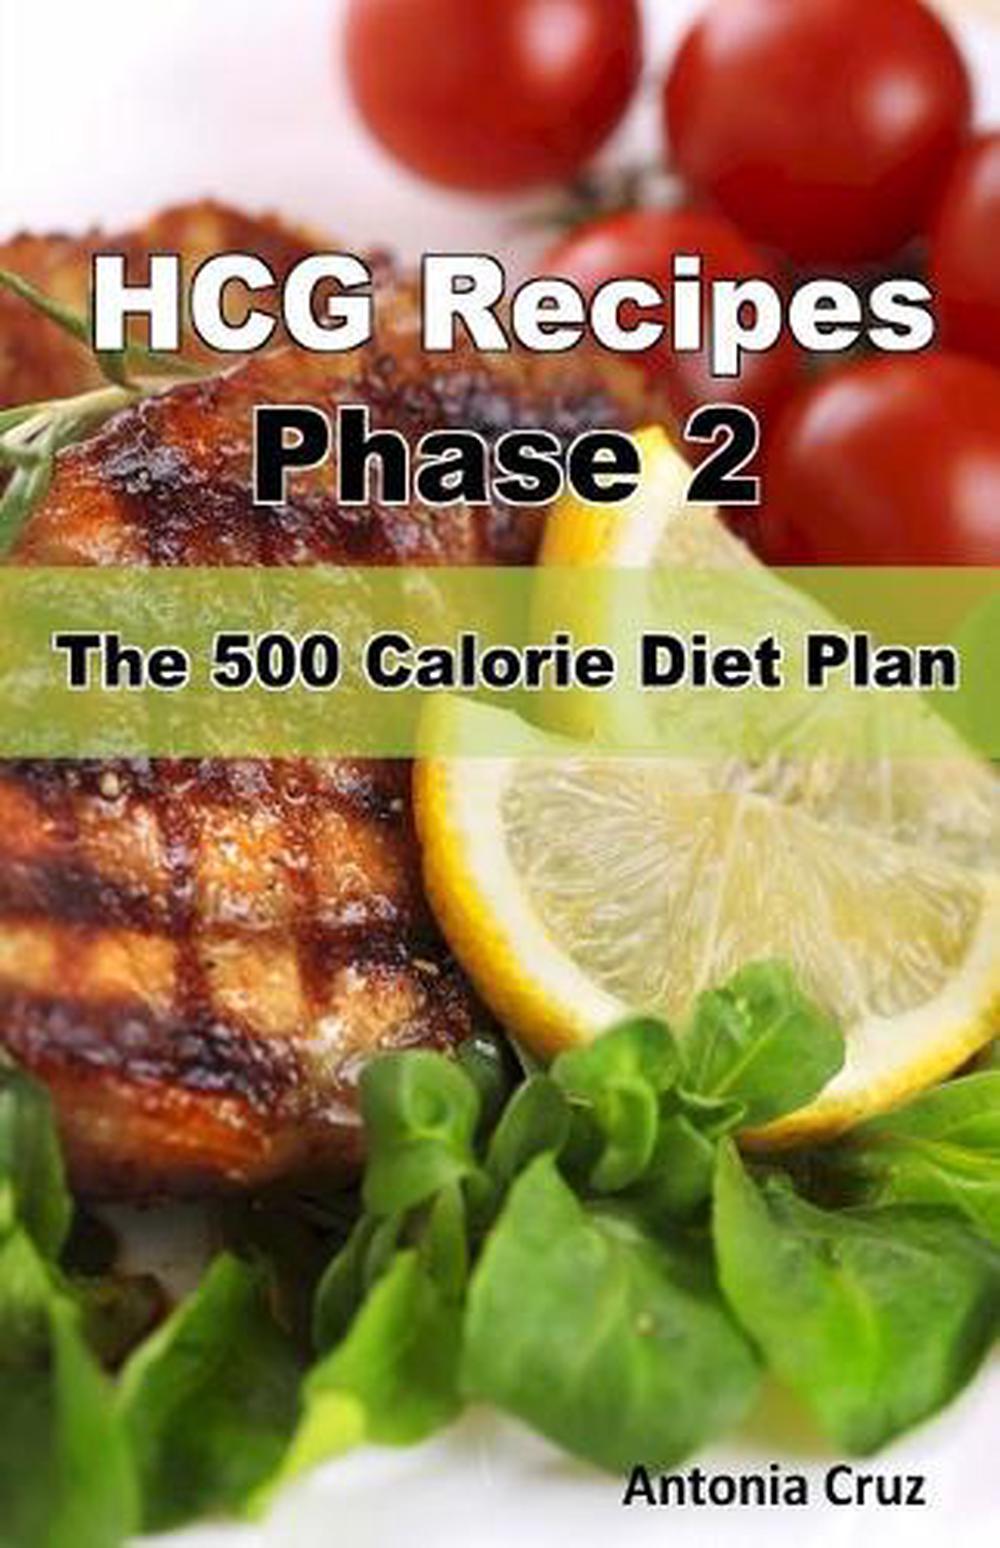 HCG Recipes Phase 2 The 500 Calorie Diet Plan by Antonia Cruz (English